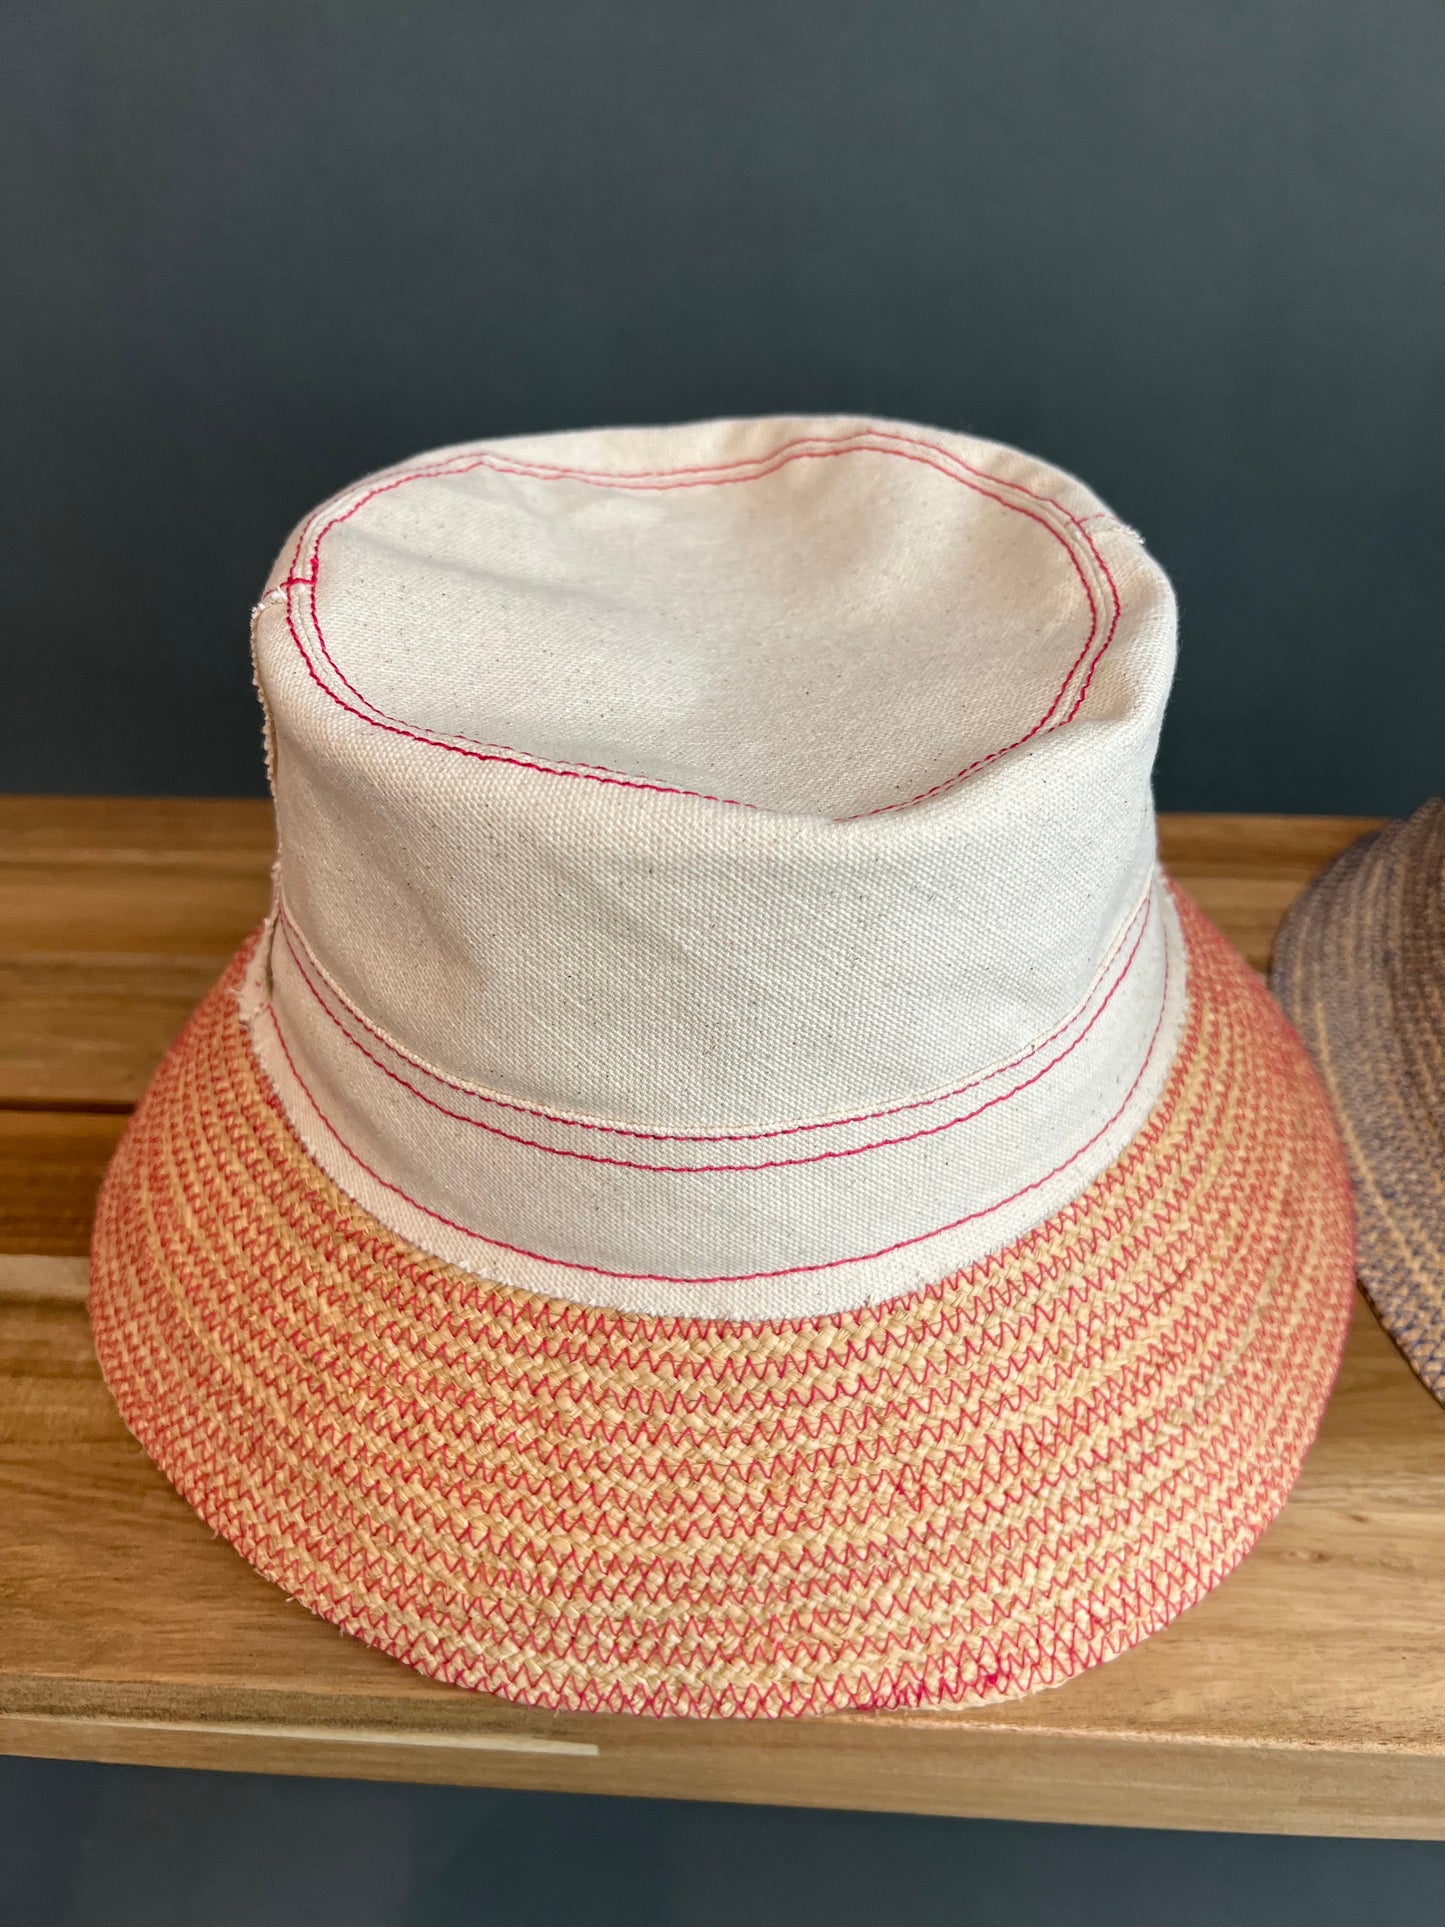 Lola Bread Bag Hat- in three colors